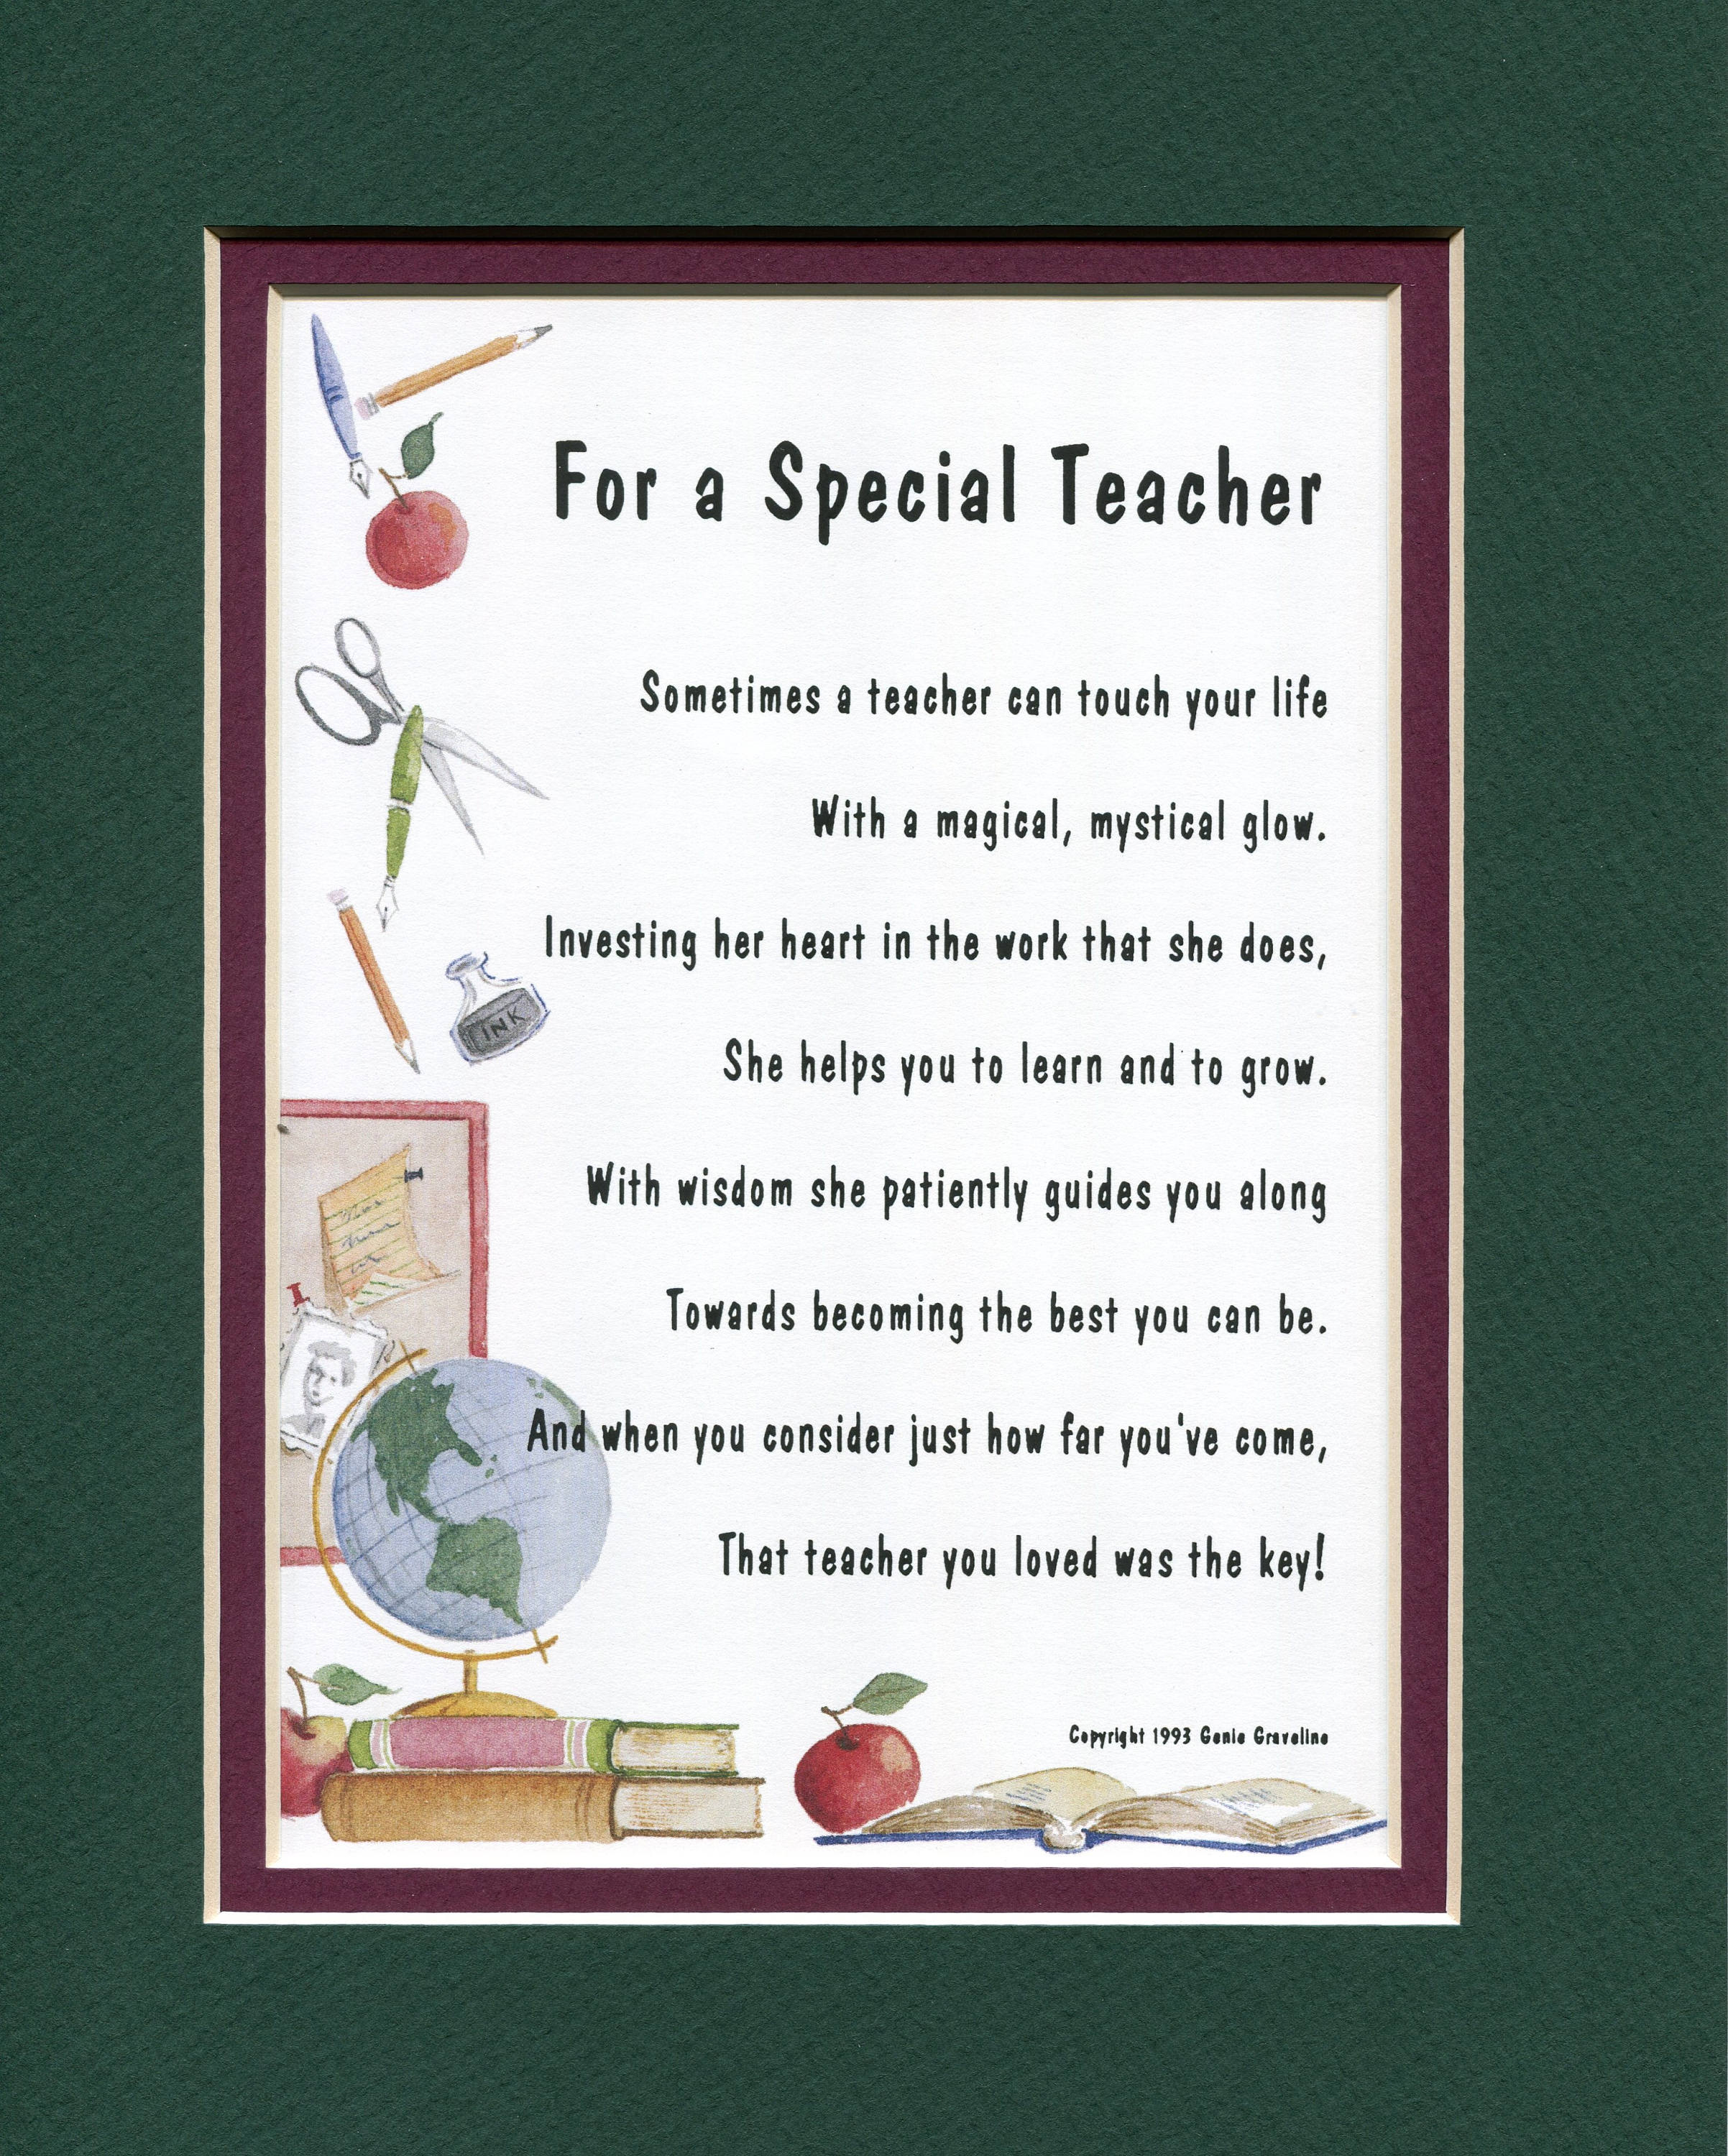 The special teacher